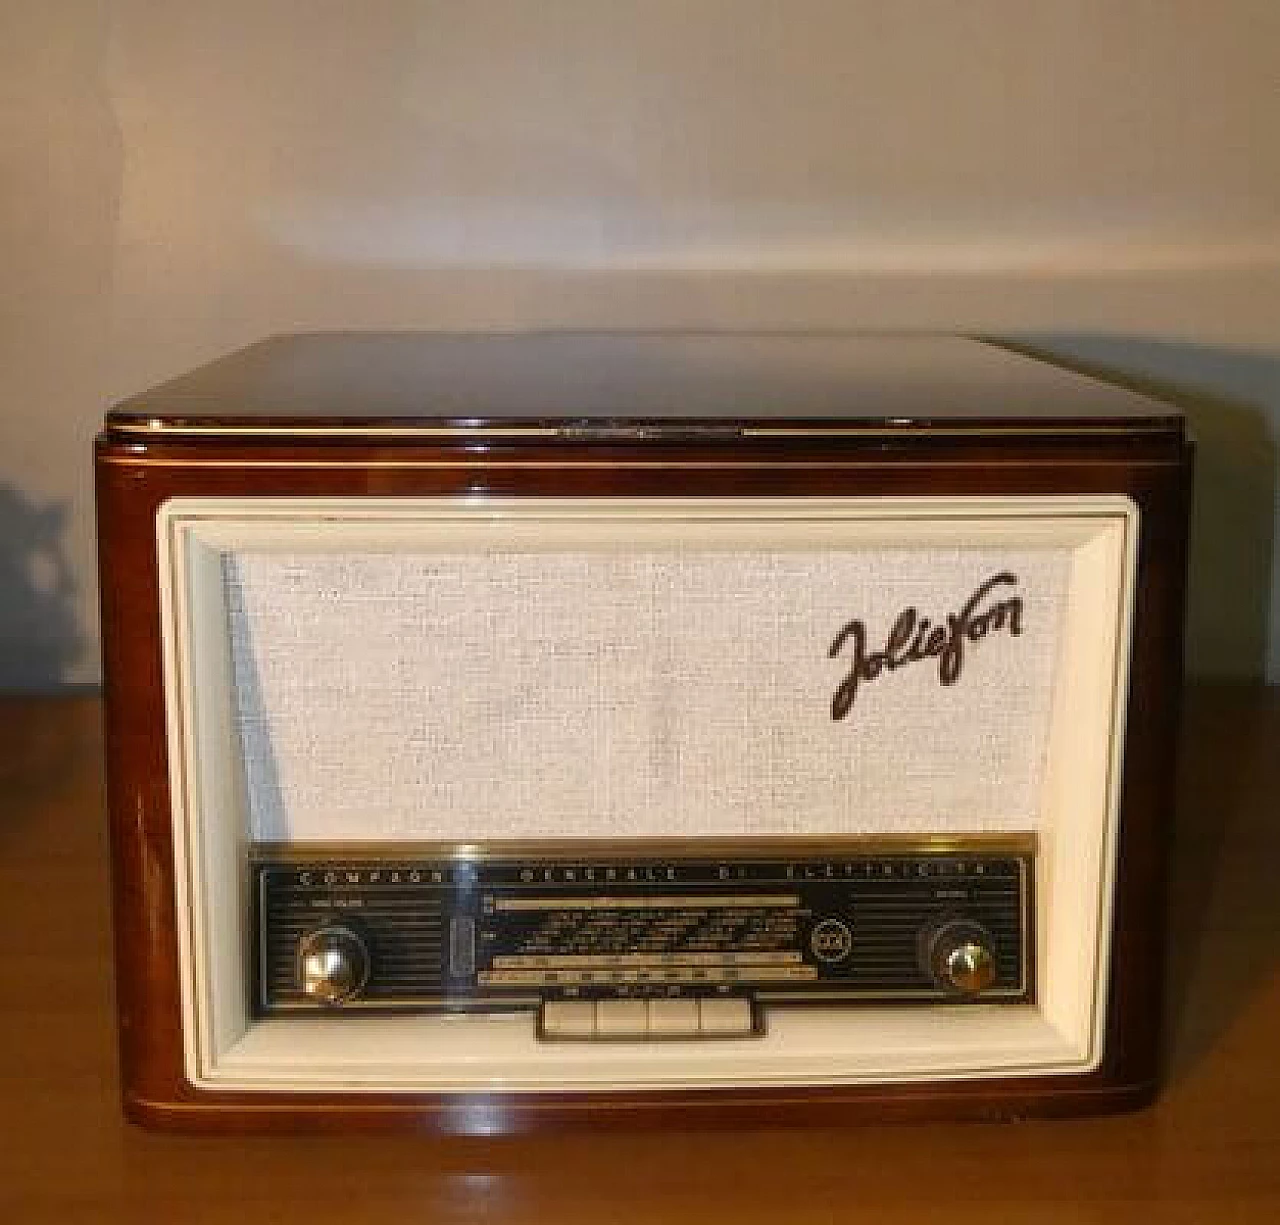 Wood Joliefon RFS 6597 turntable radio by CGE, 1950s 1